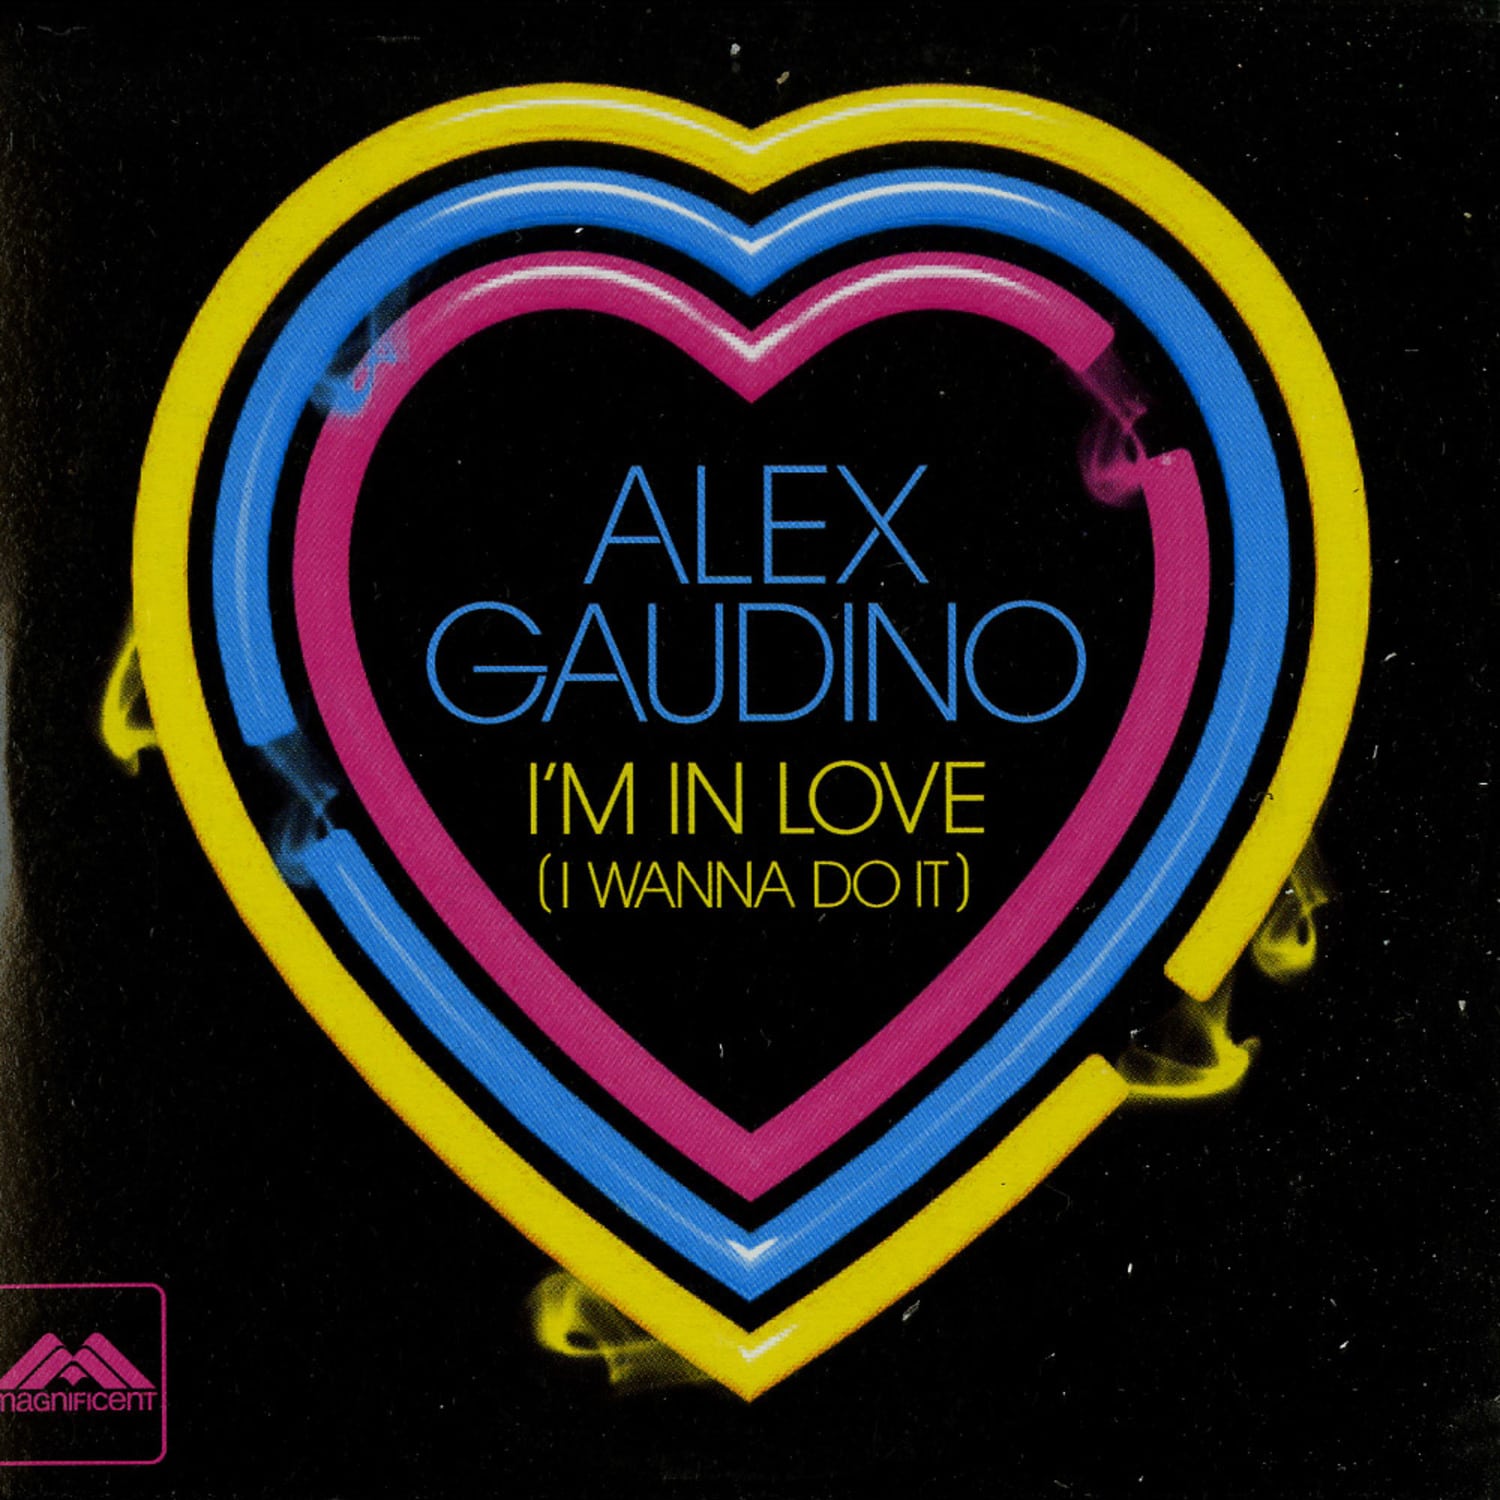 Alex Gaudino - IM IN LOVE 